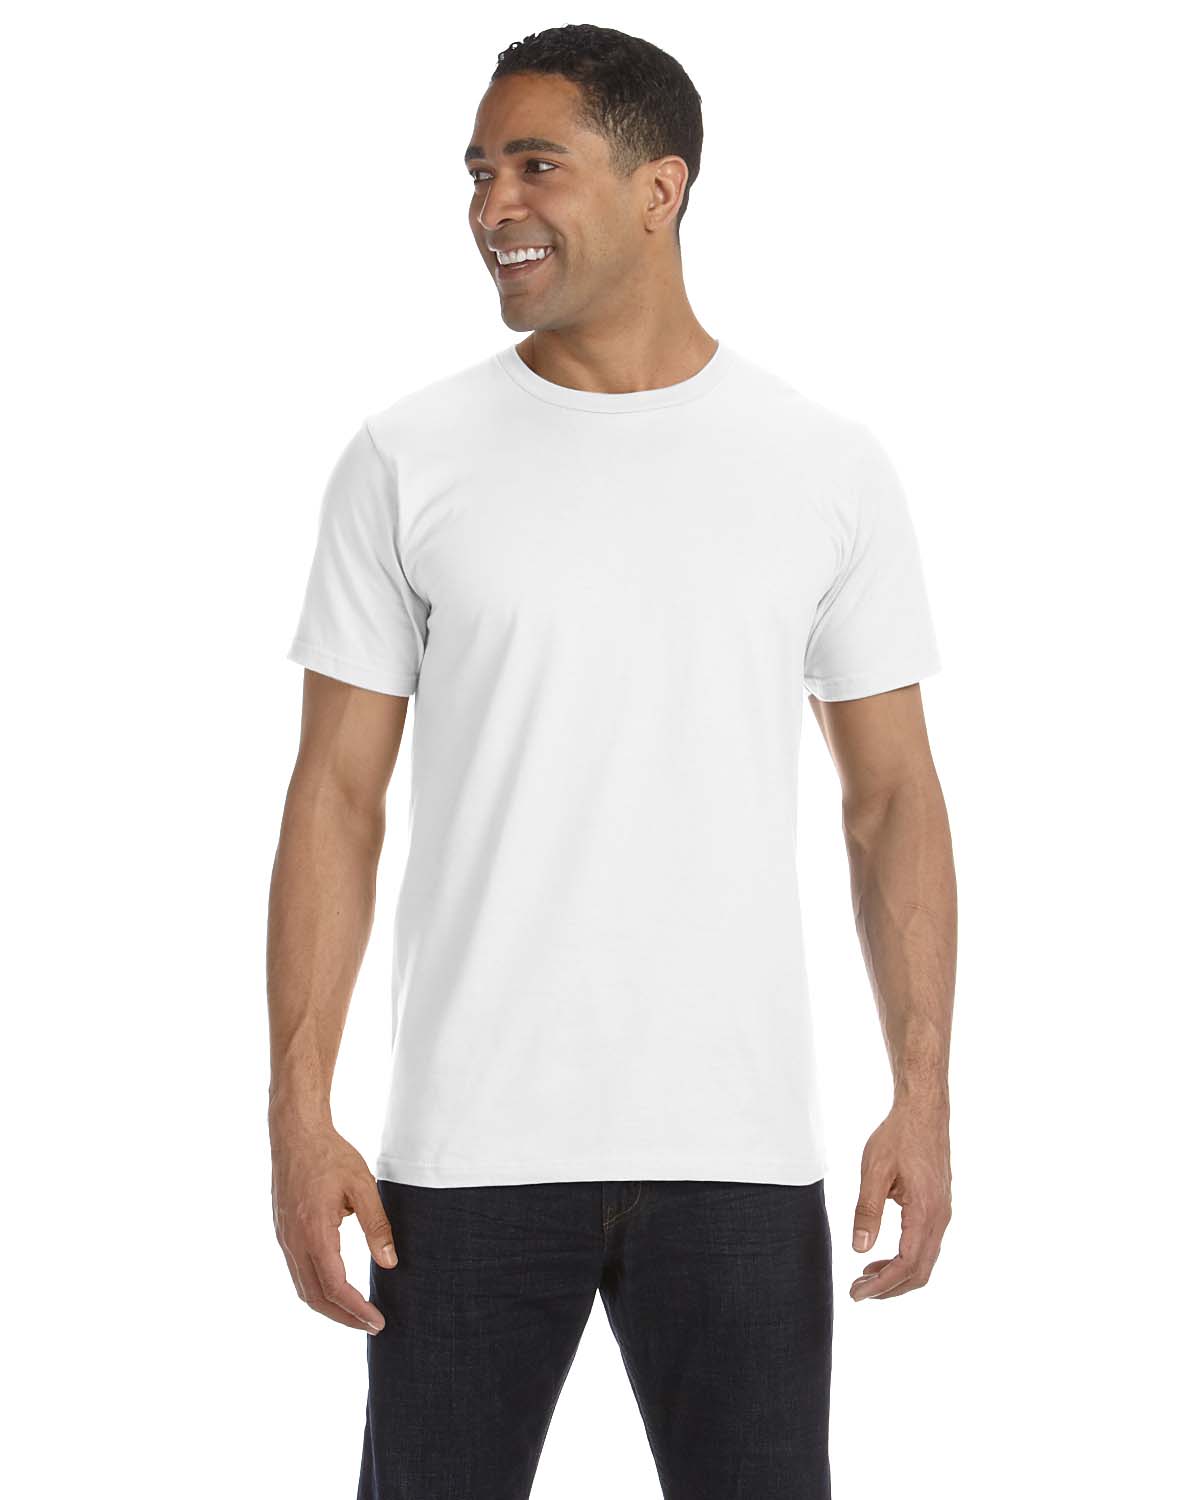 NEW Anvil Mens 100% Organic Cotton Lightweight BIG SIZE 2XL-3XL T-Shirt ...